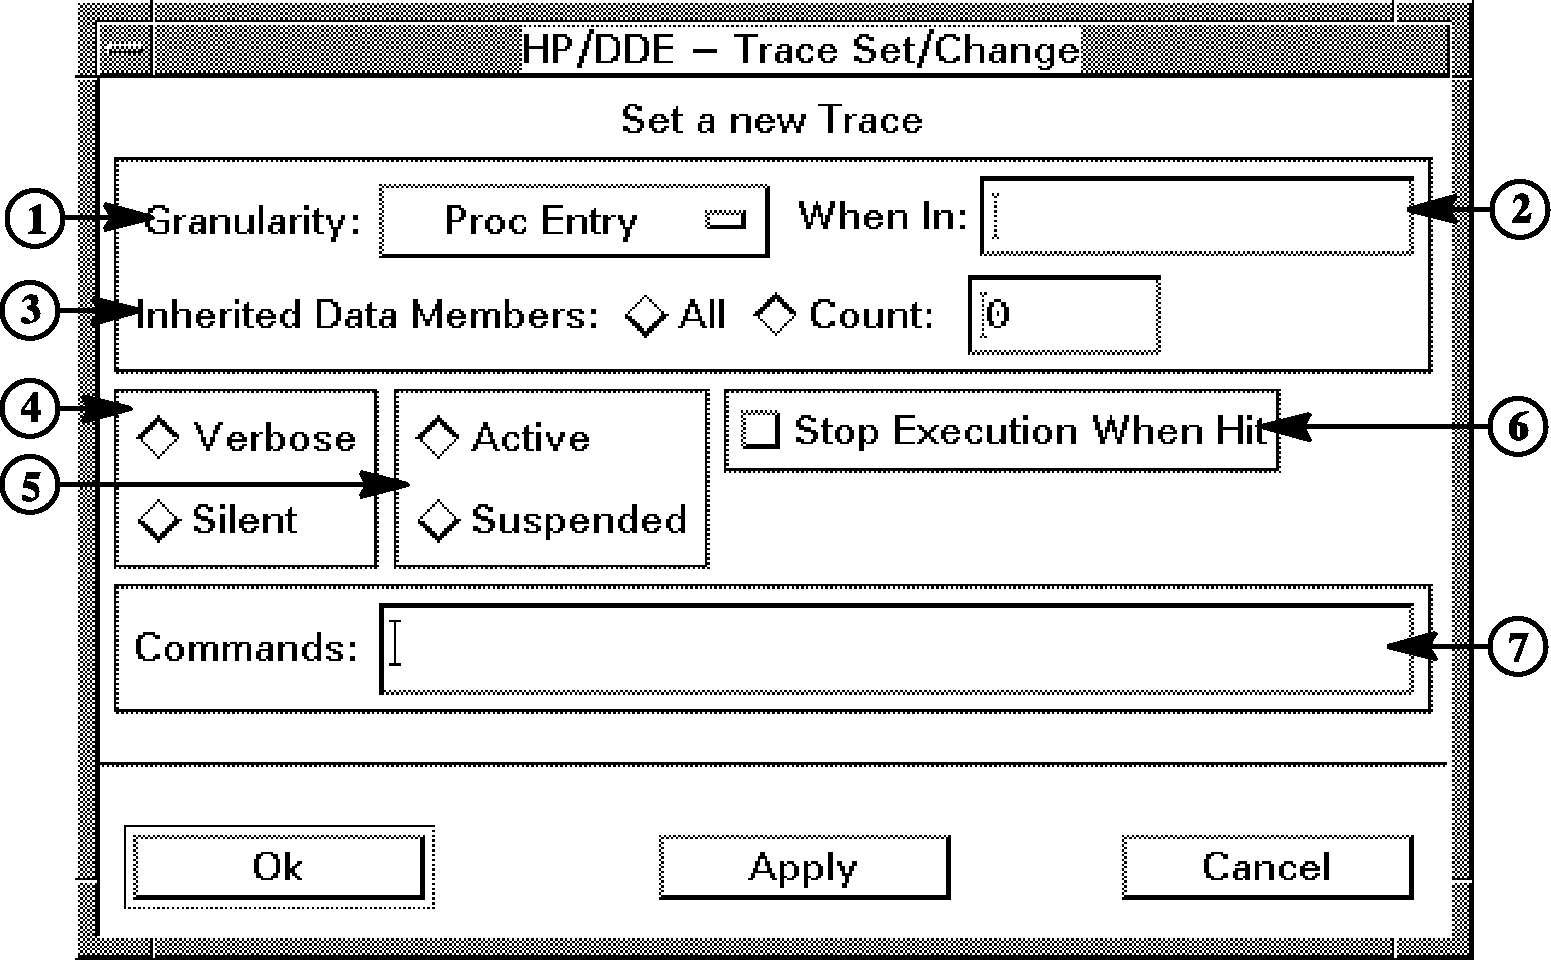 [The Trace Set/Change Dialog Box]